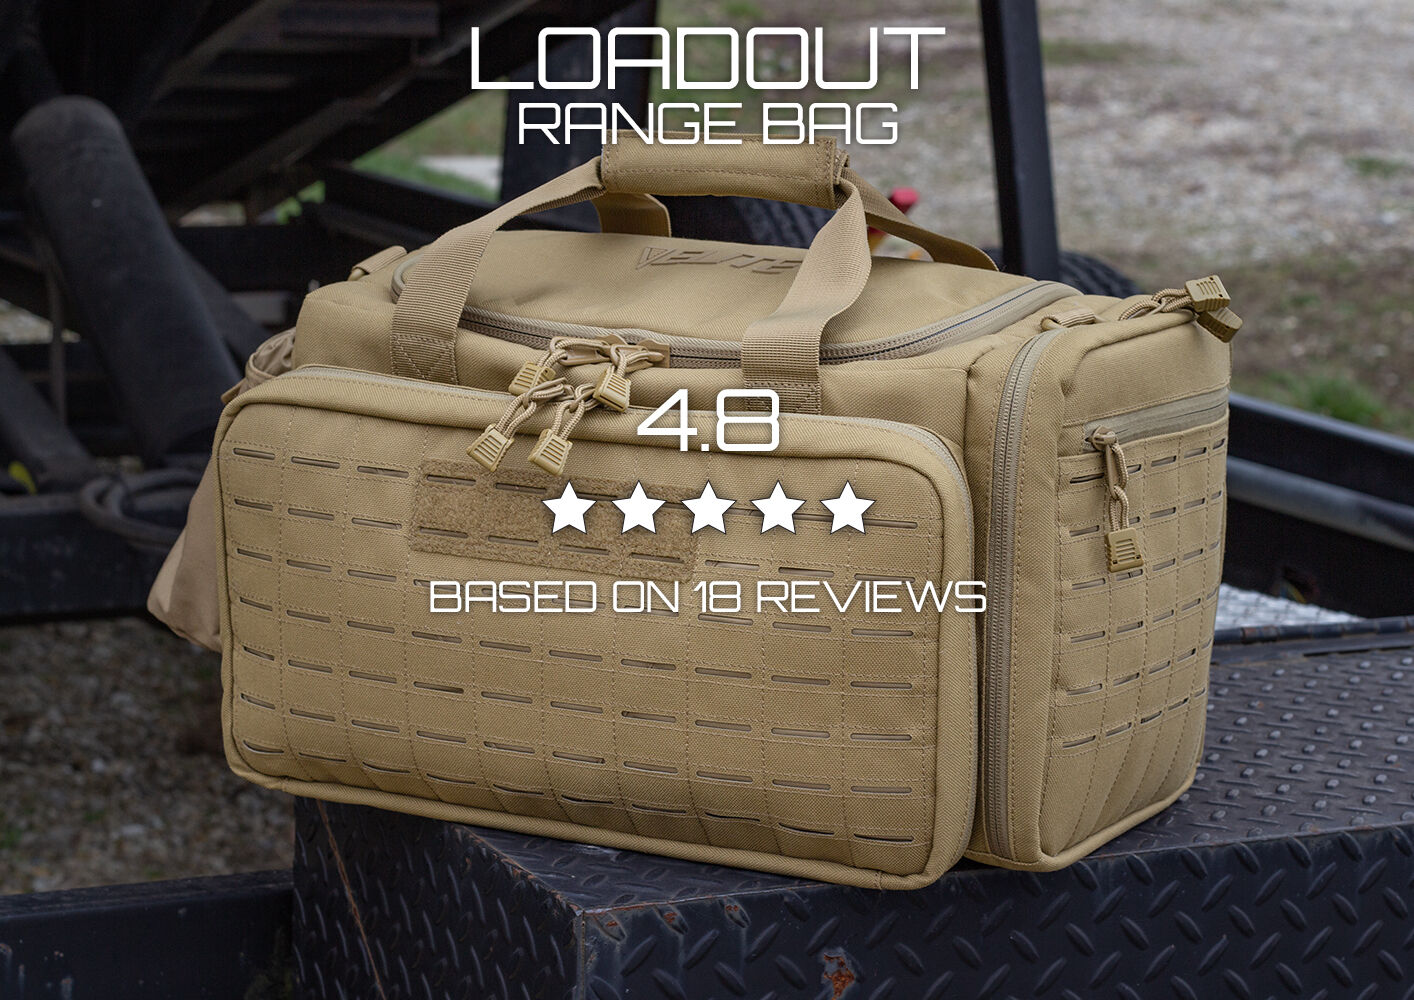 Elite Survival Loadout Range Bag - Tactical Range Bag for Ammunition and Firearm Storage. Durable and Spacious Design. Order Now for Easy Transportation!